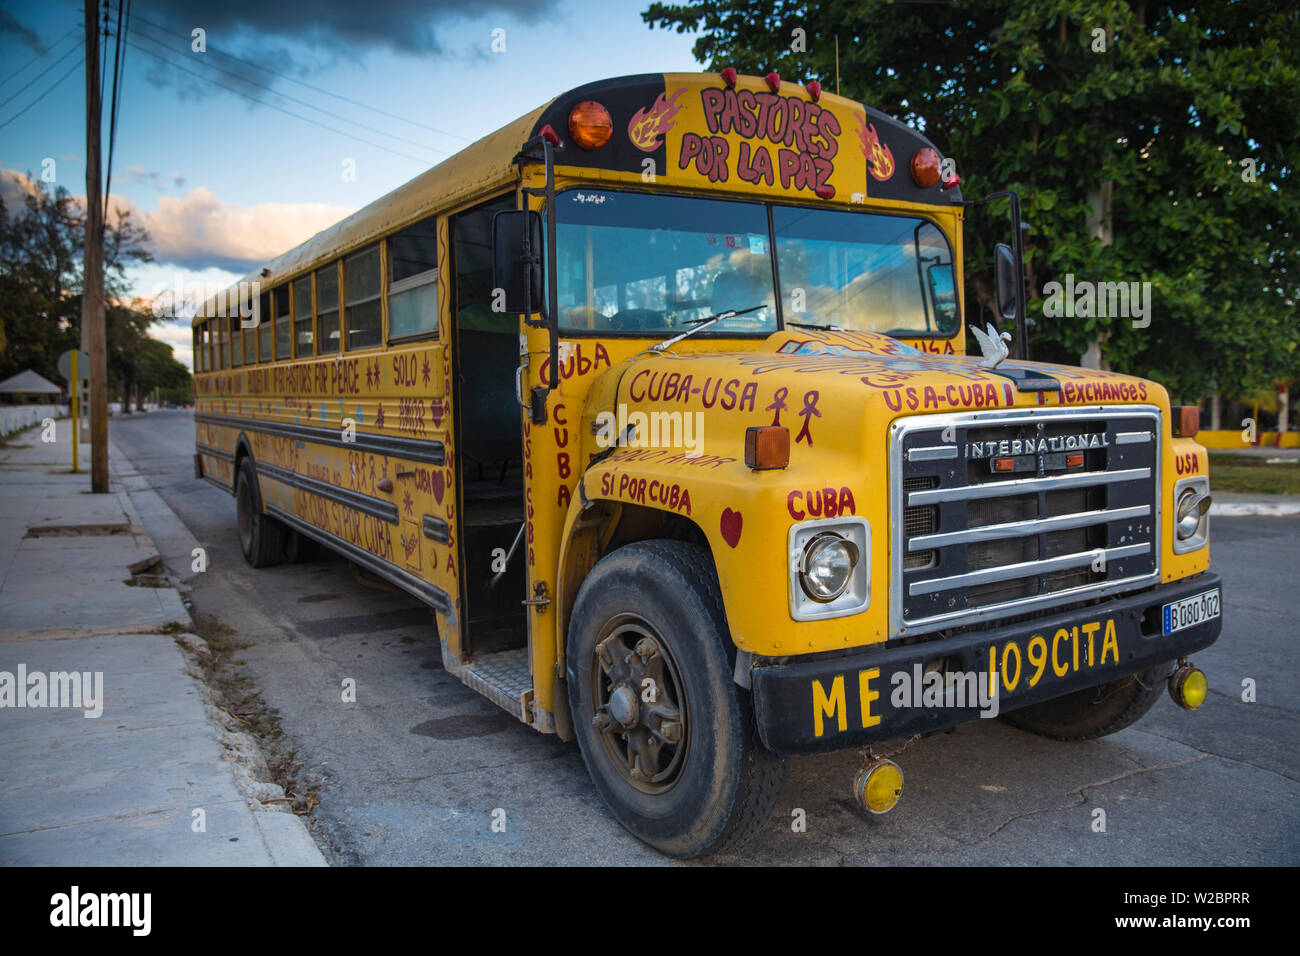 Cuba, Varadero, American yellow school bus, given to aid USA - Cuban relations Stock Photo